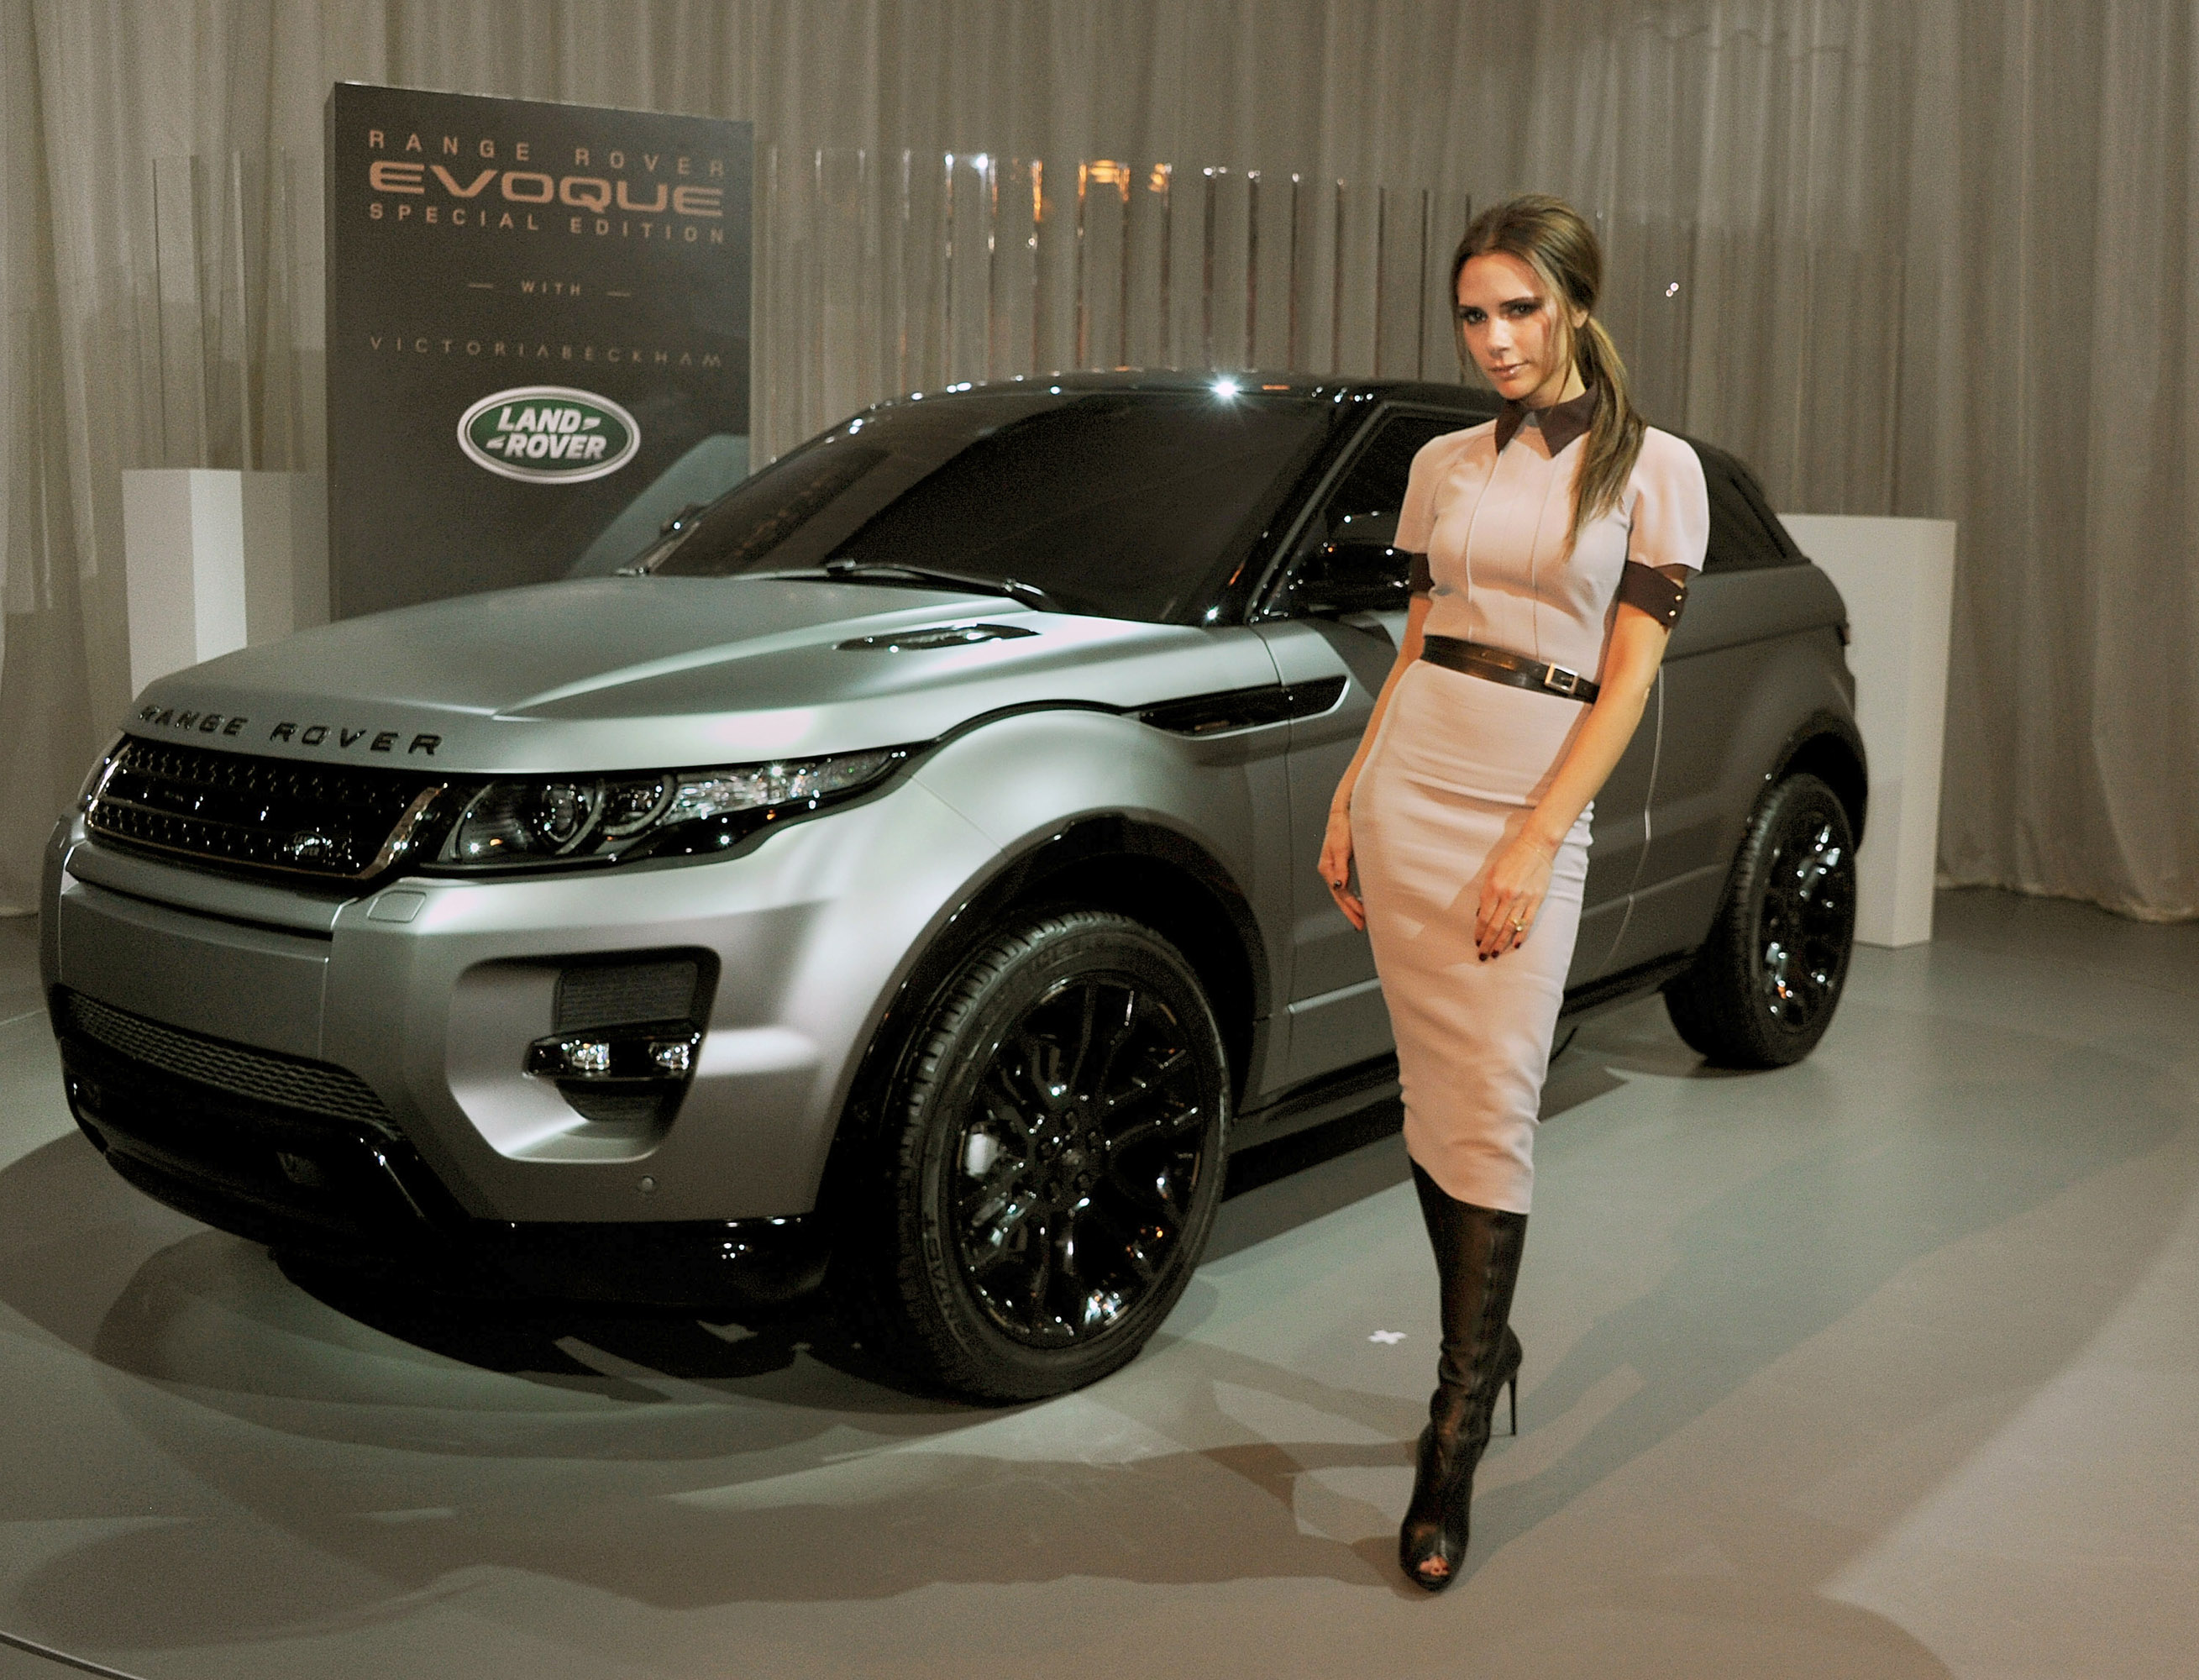 Range Rover Evoque Victoria Beckham Edition photo #1